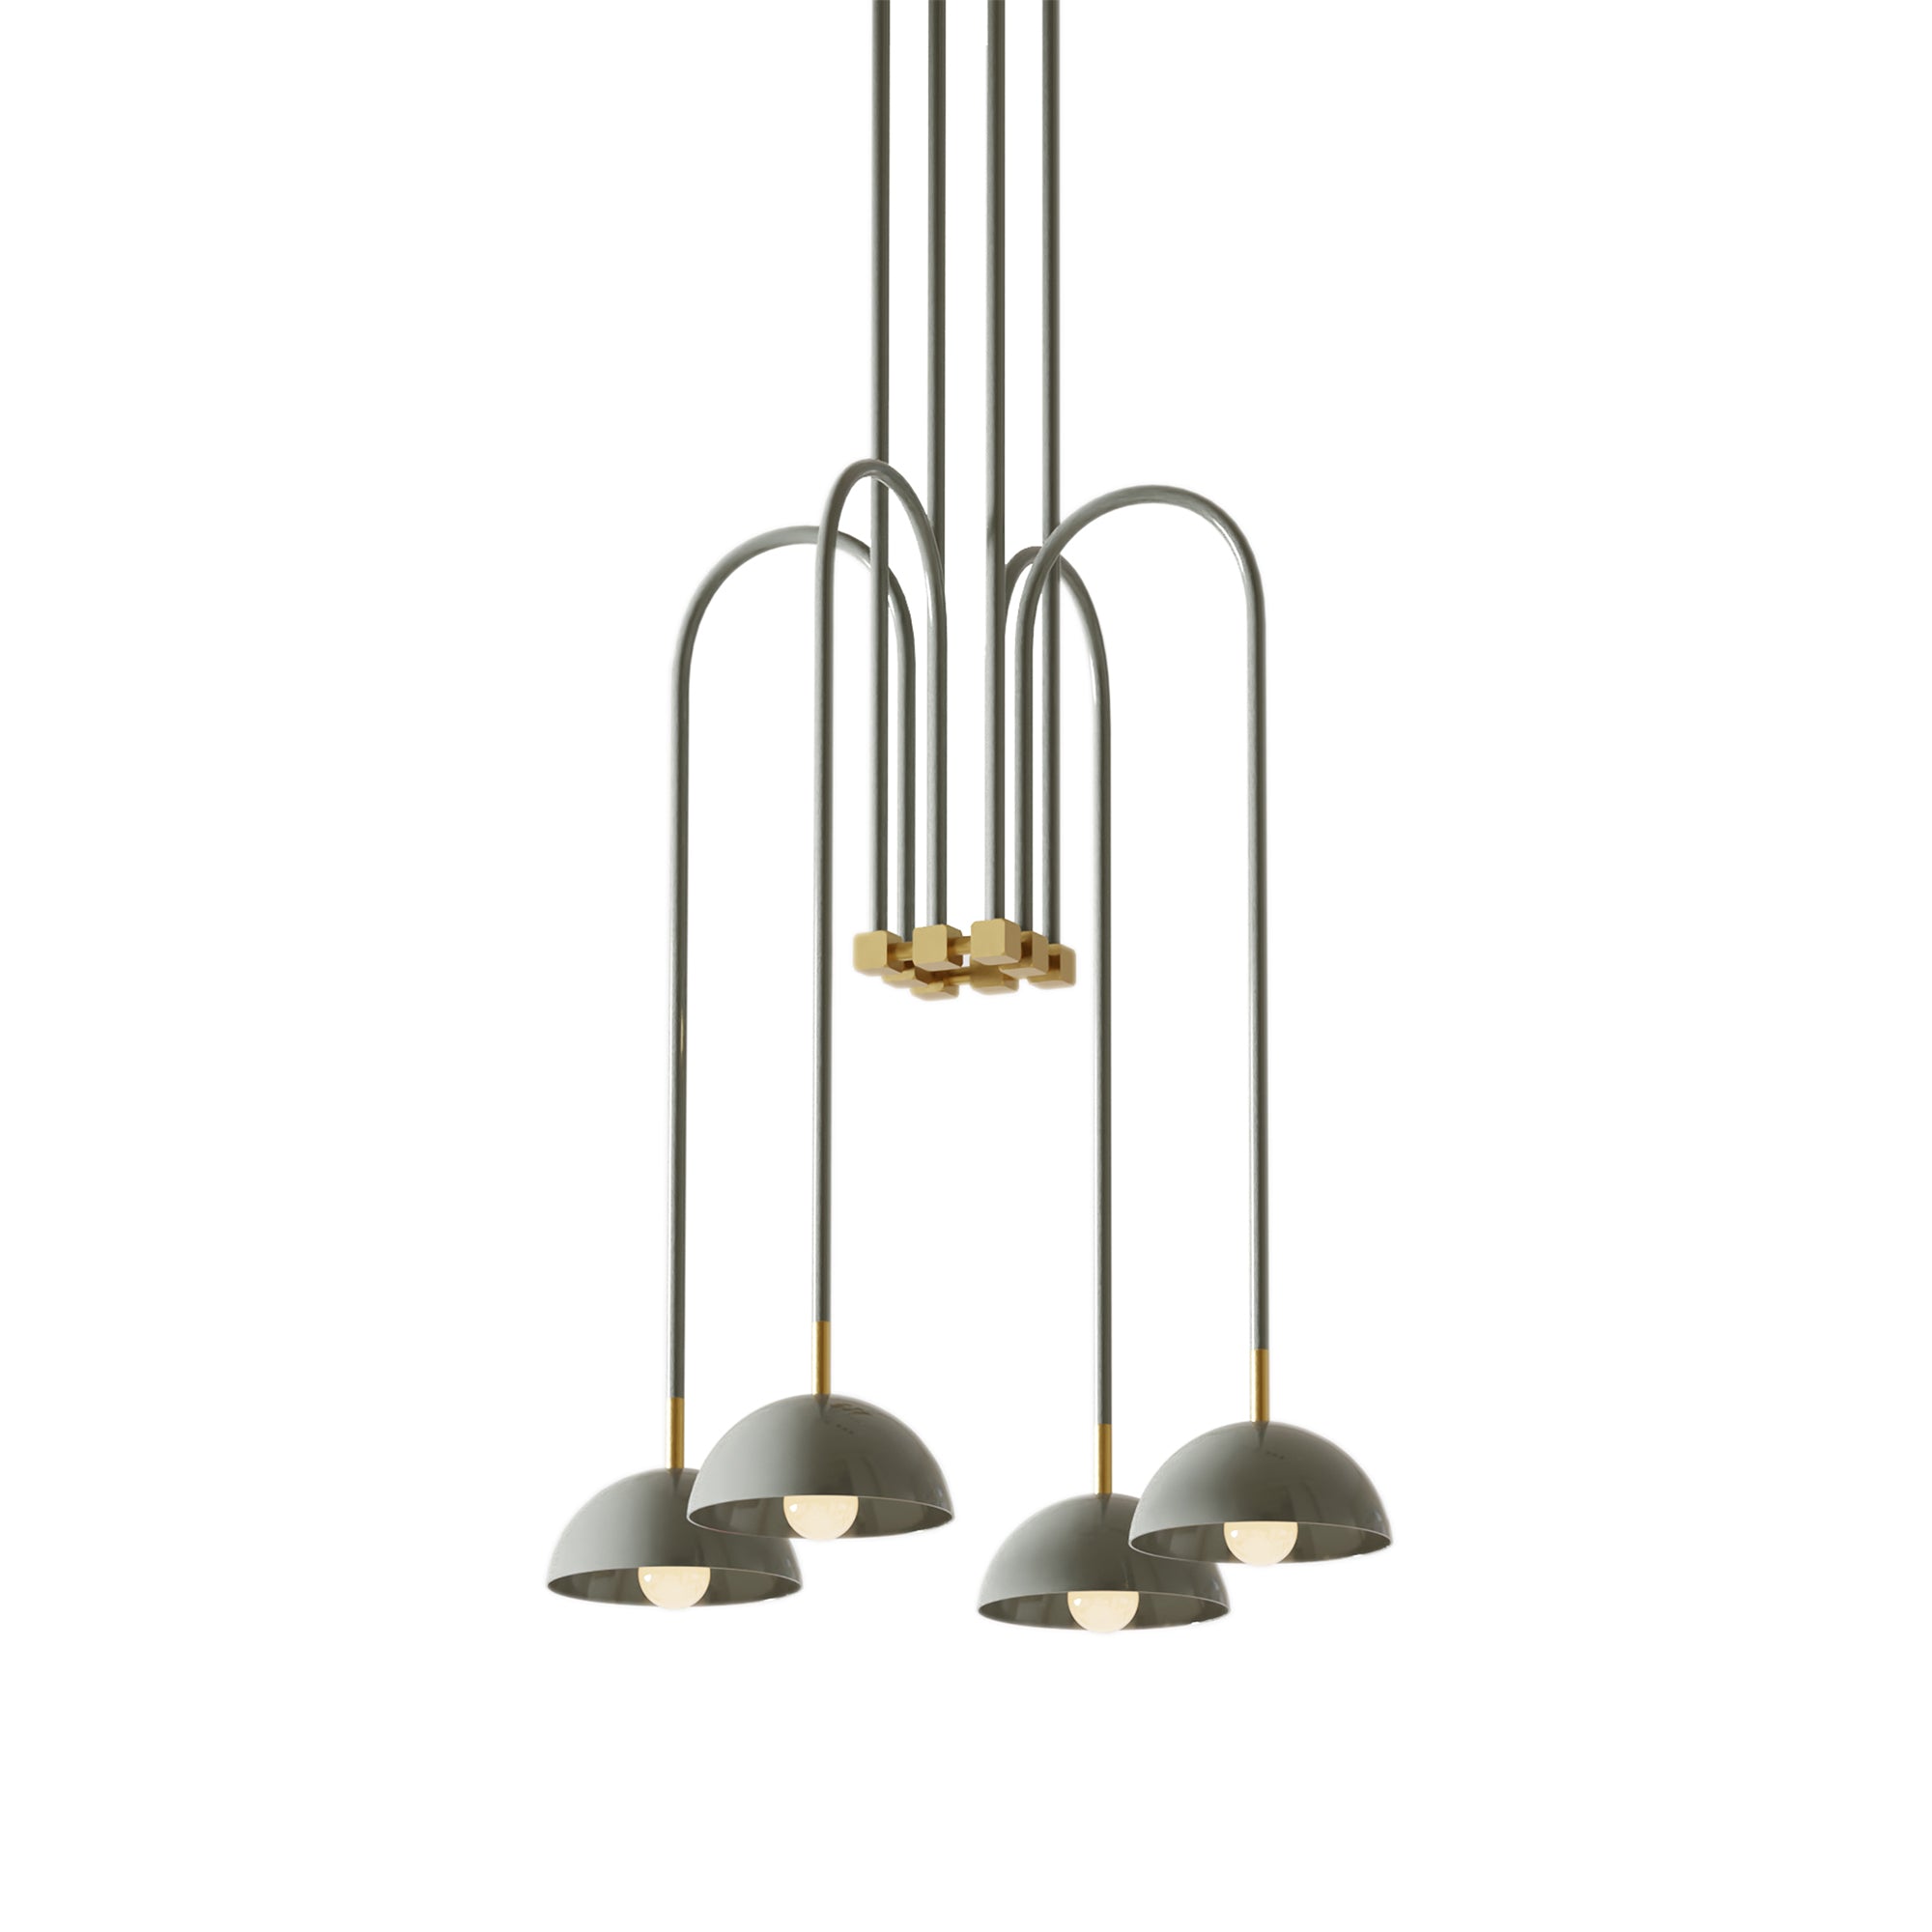 Beaubien Atelier 03 Suspension Lamp: Glossy Elephant